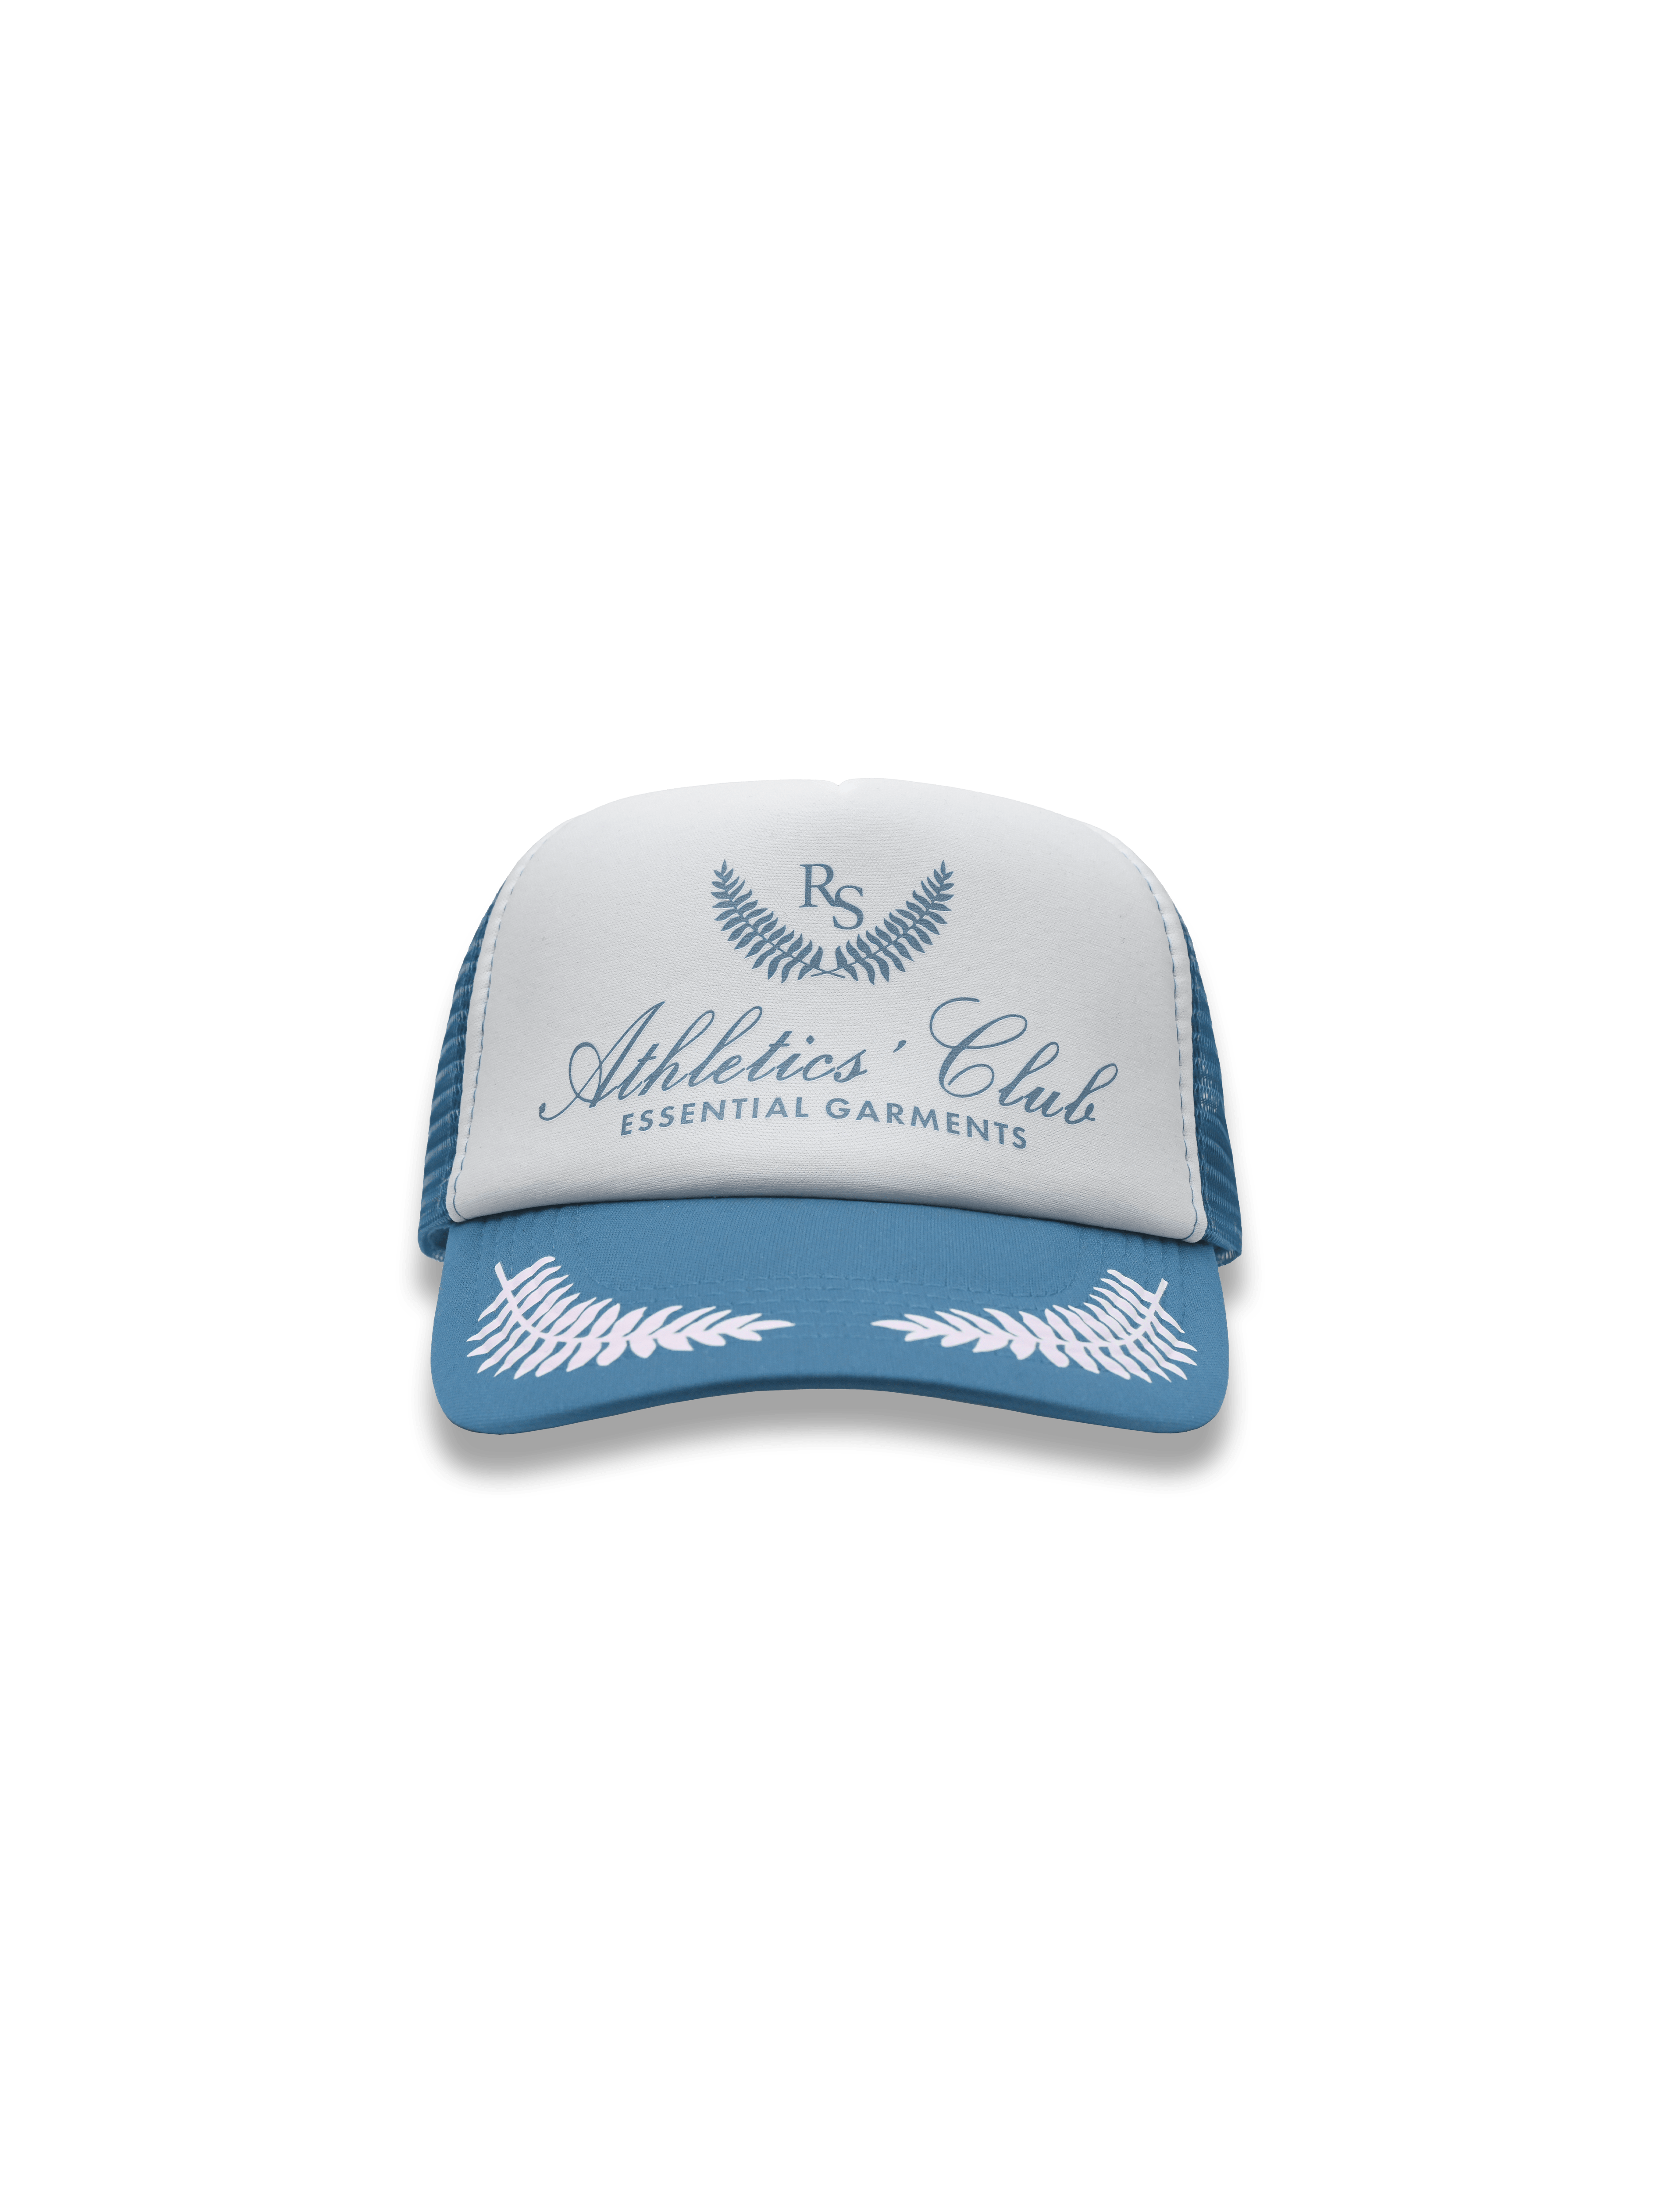 Athletic's Club Trucker Cap - Baby Blue